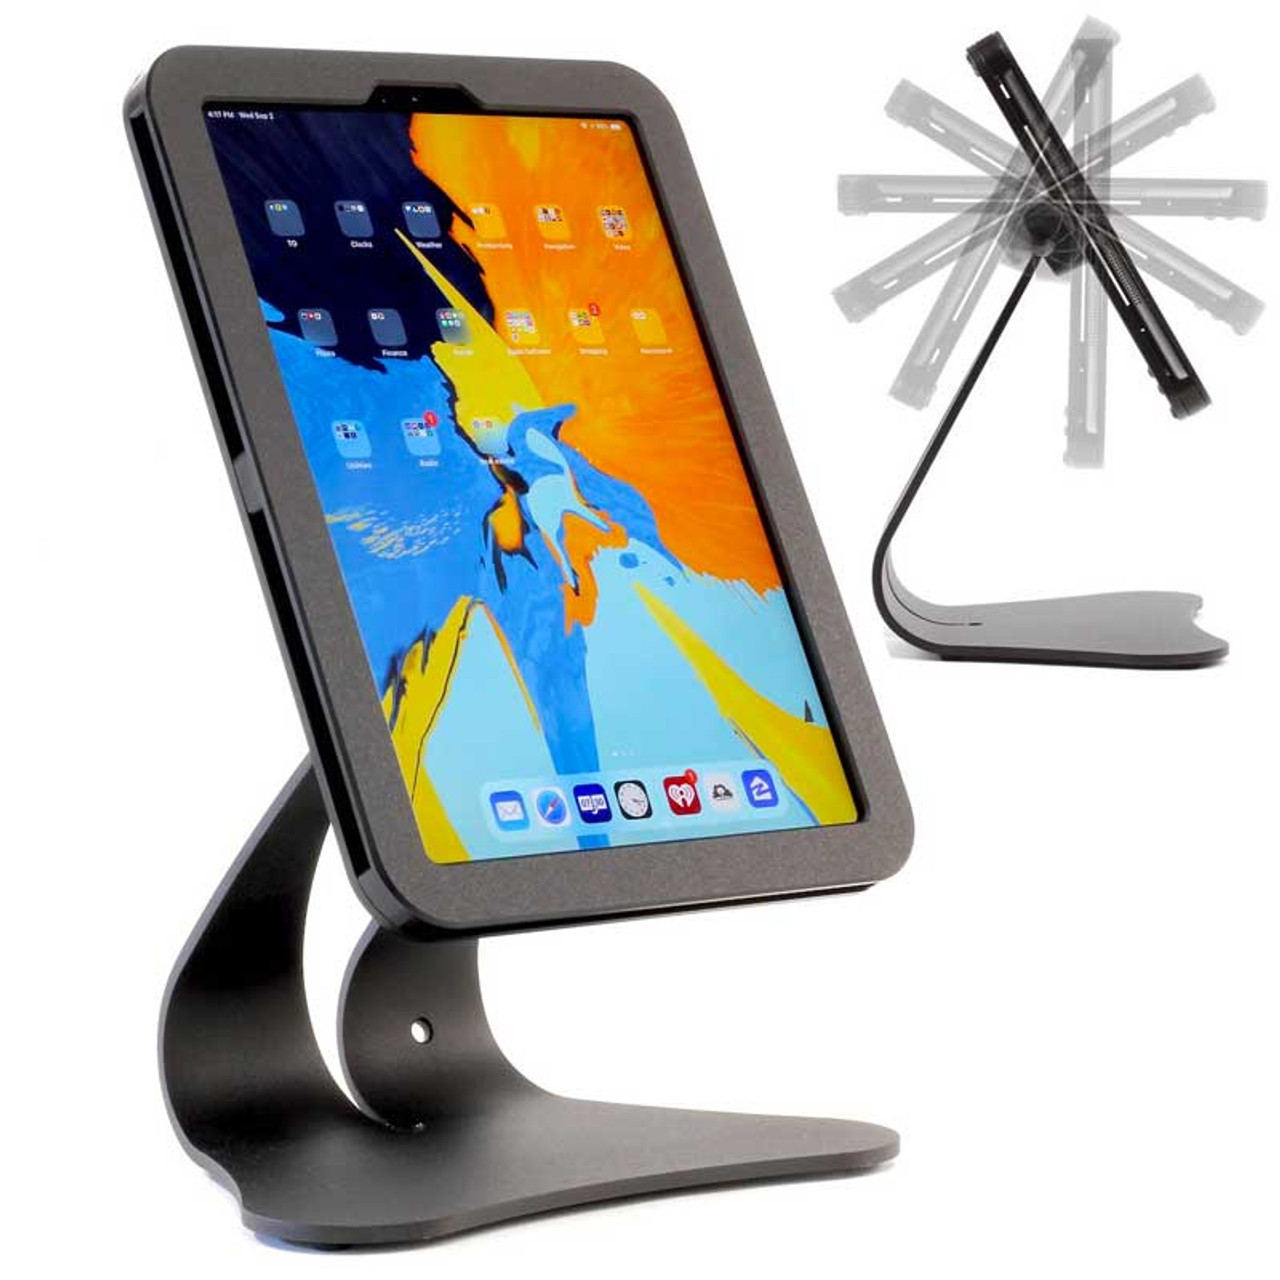 Flip & Rotate Design iPad Desktop Anti-Theft Security Kiosk POS Stand Holder Enclosure with Lock & Key for Tablets iPad 2,3,4 iPad Pro 9.7 iPad 2017 & 2018 iPad air Black iPad air 2 